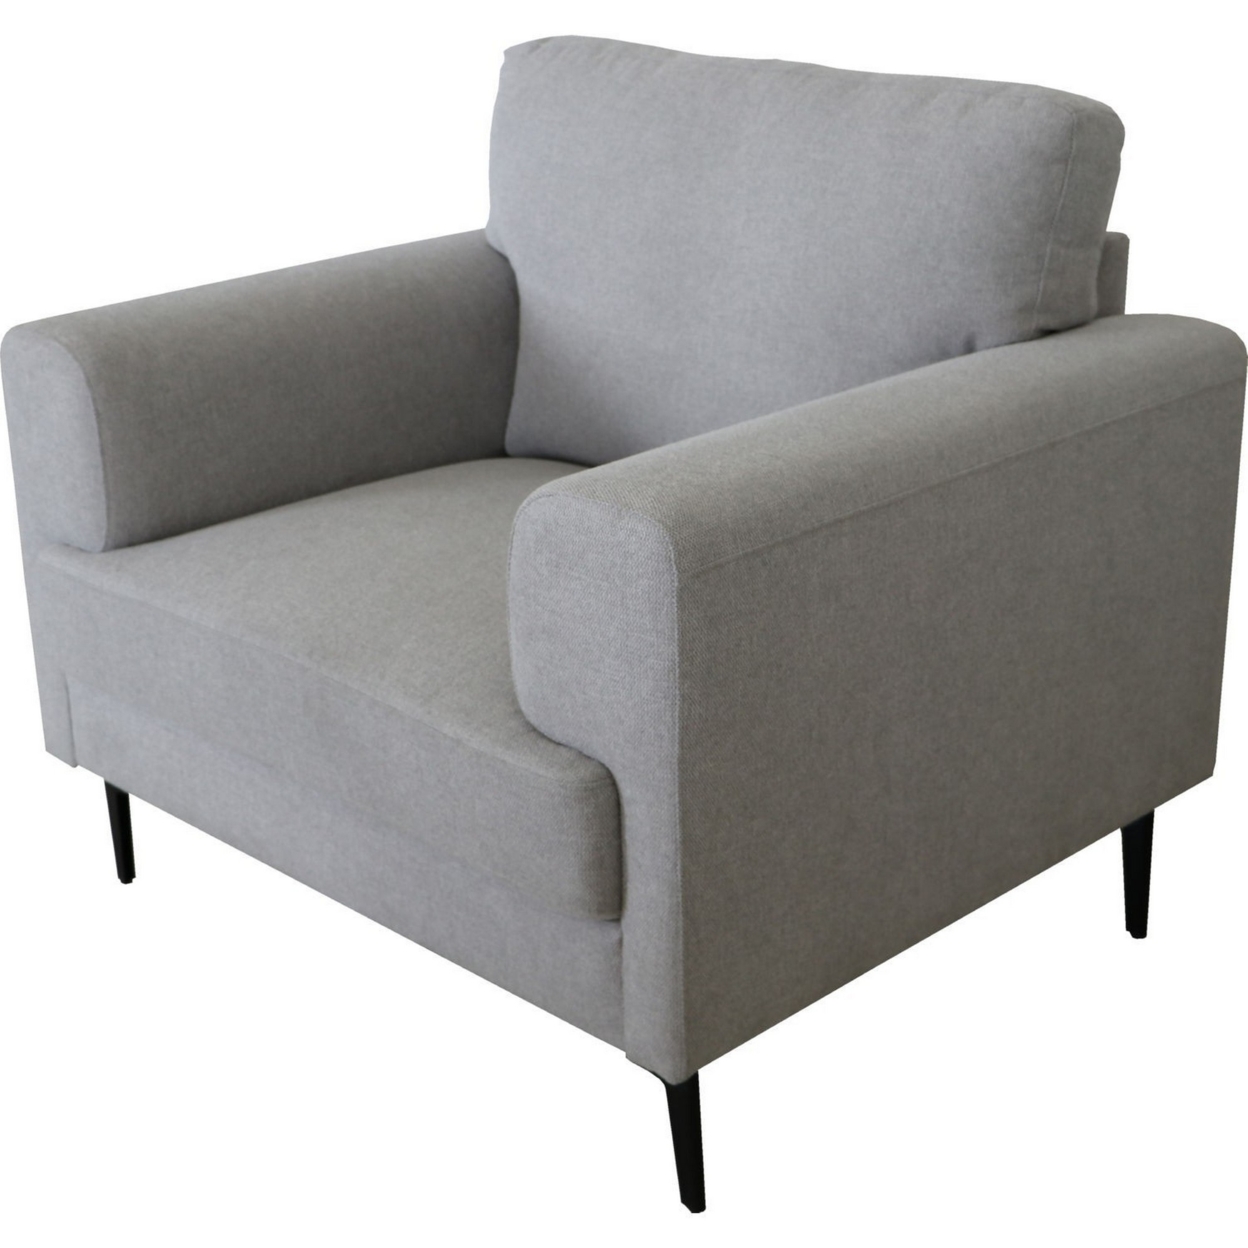 Chair With Fabric Upholstery And Sleek Metal Legs, Gray- Saltoro Sherpi